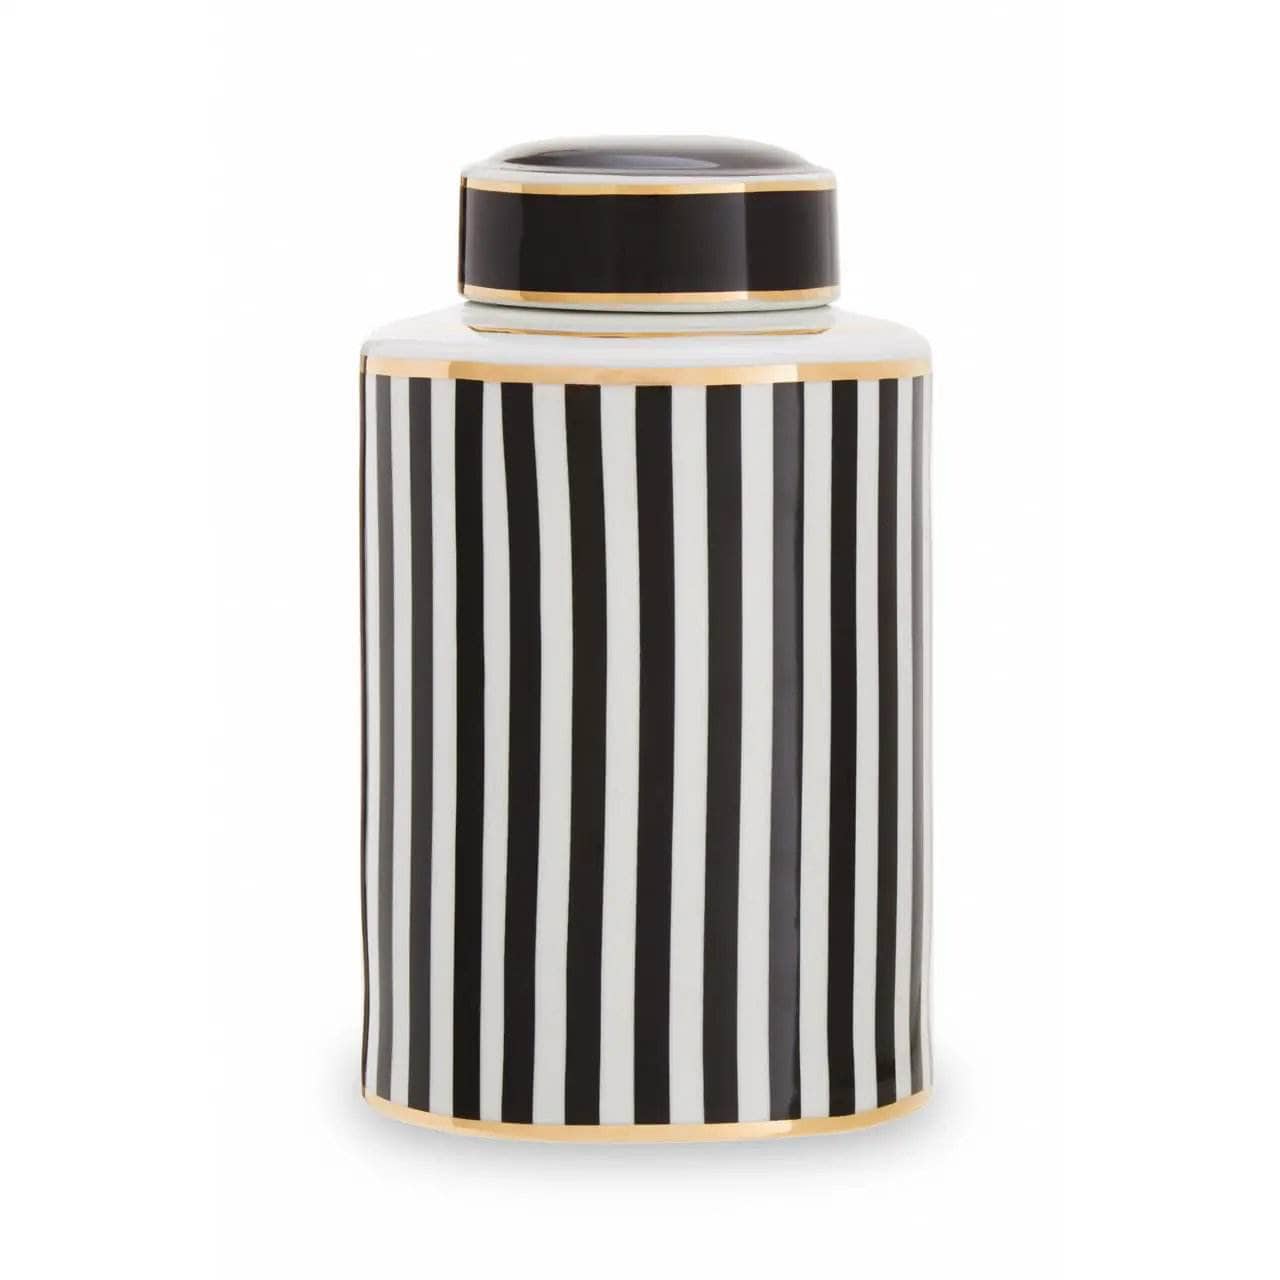  -  Doria Striped Ceramic Jar - Small  -  60003204